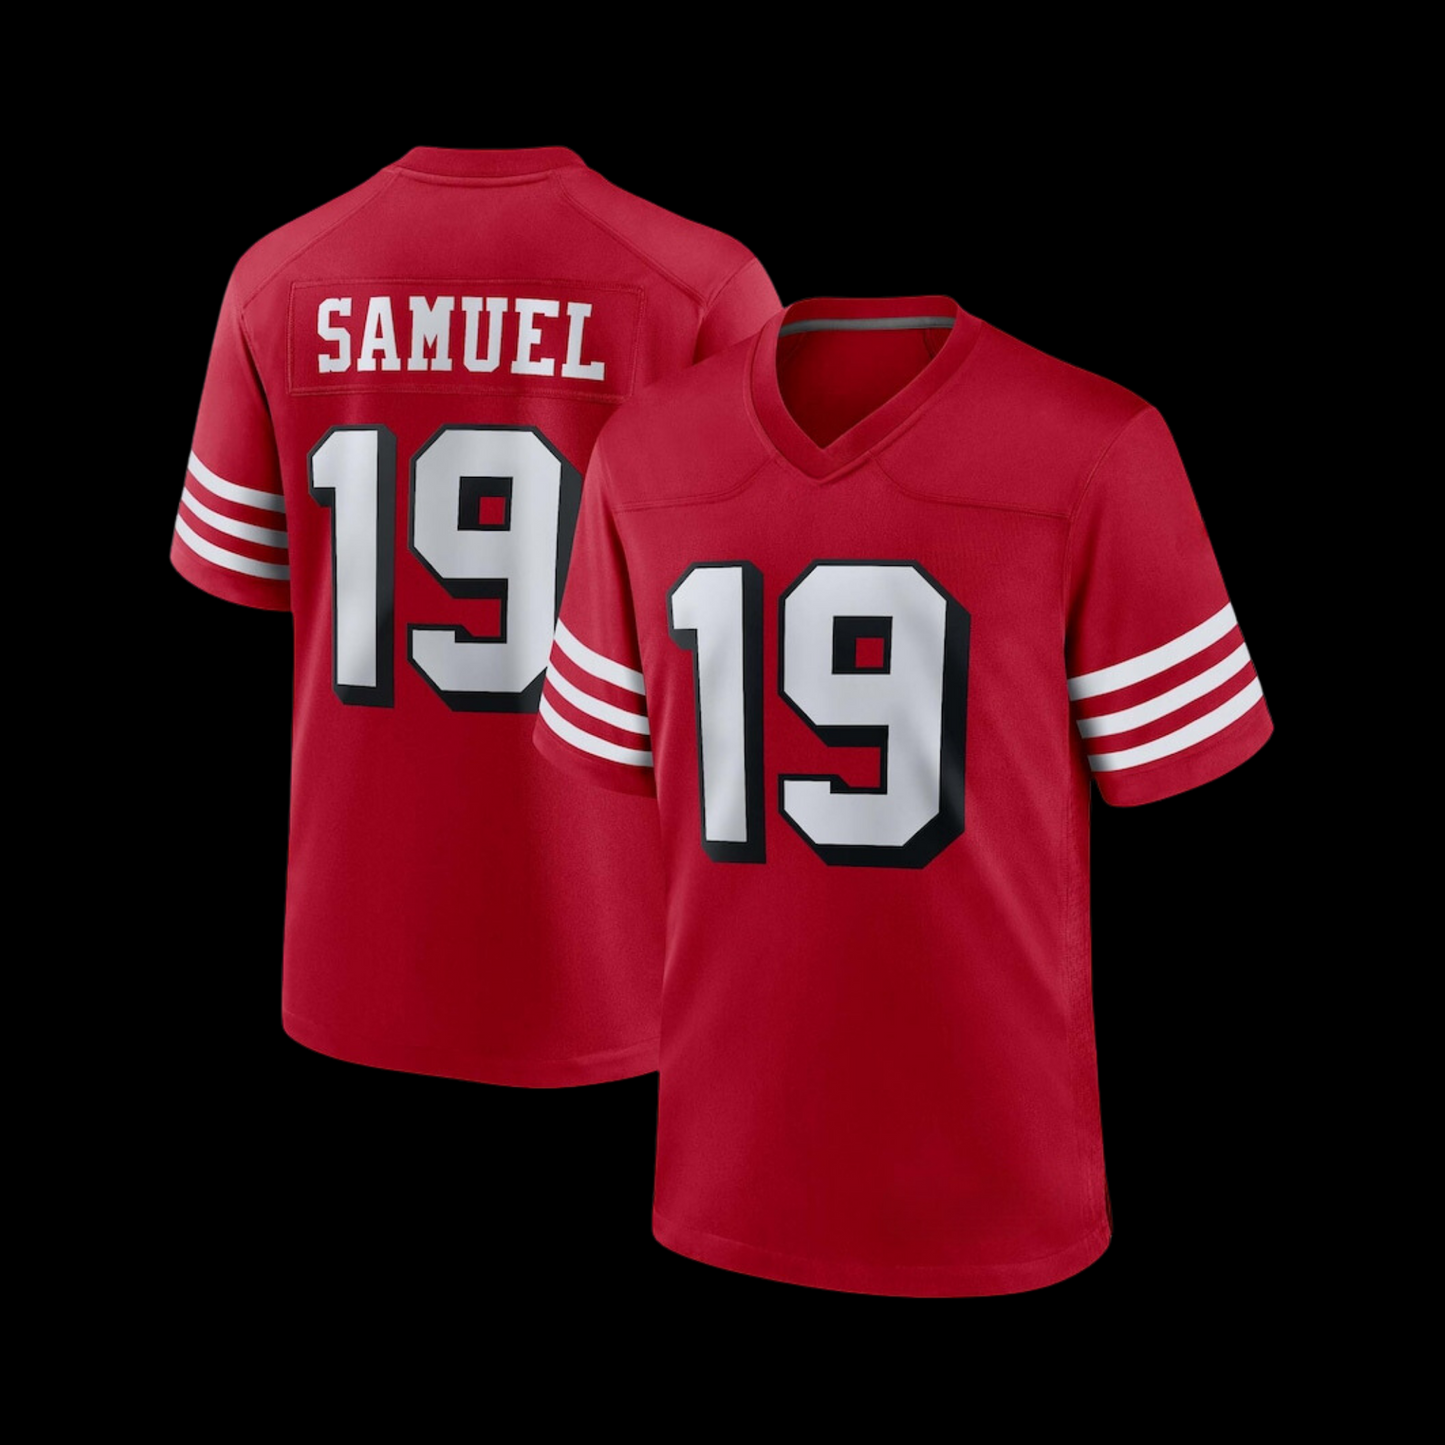 #19 Samuel Stitched Men’s 49ers jersey